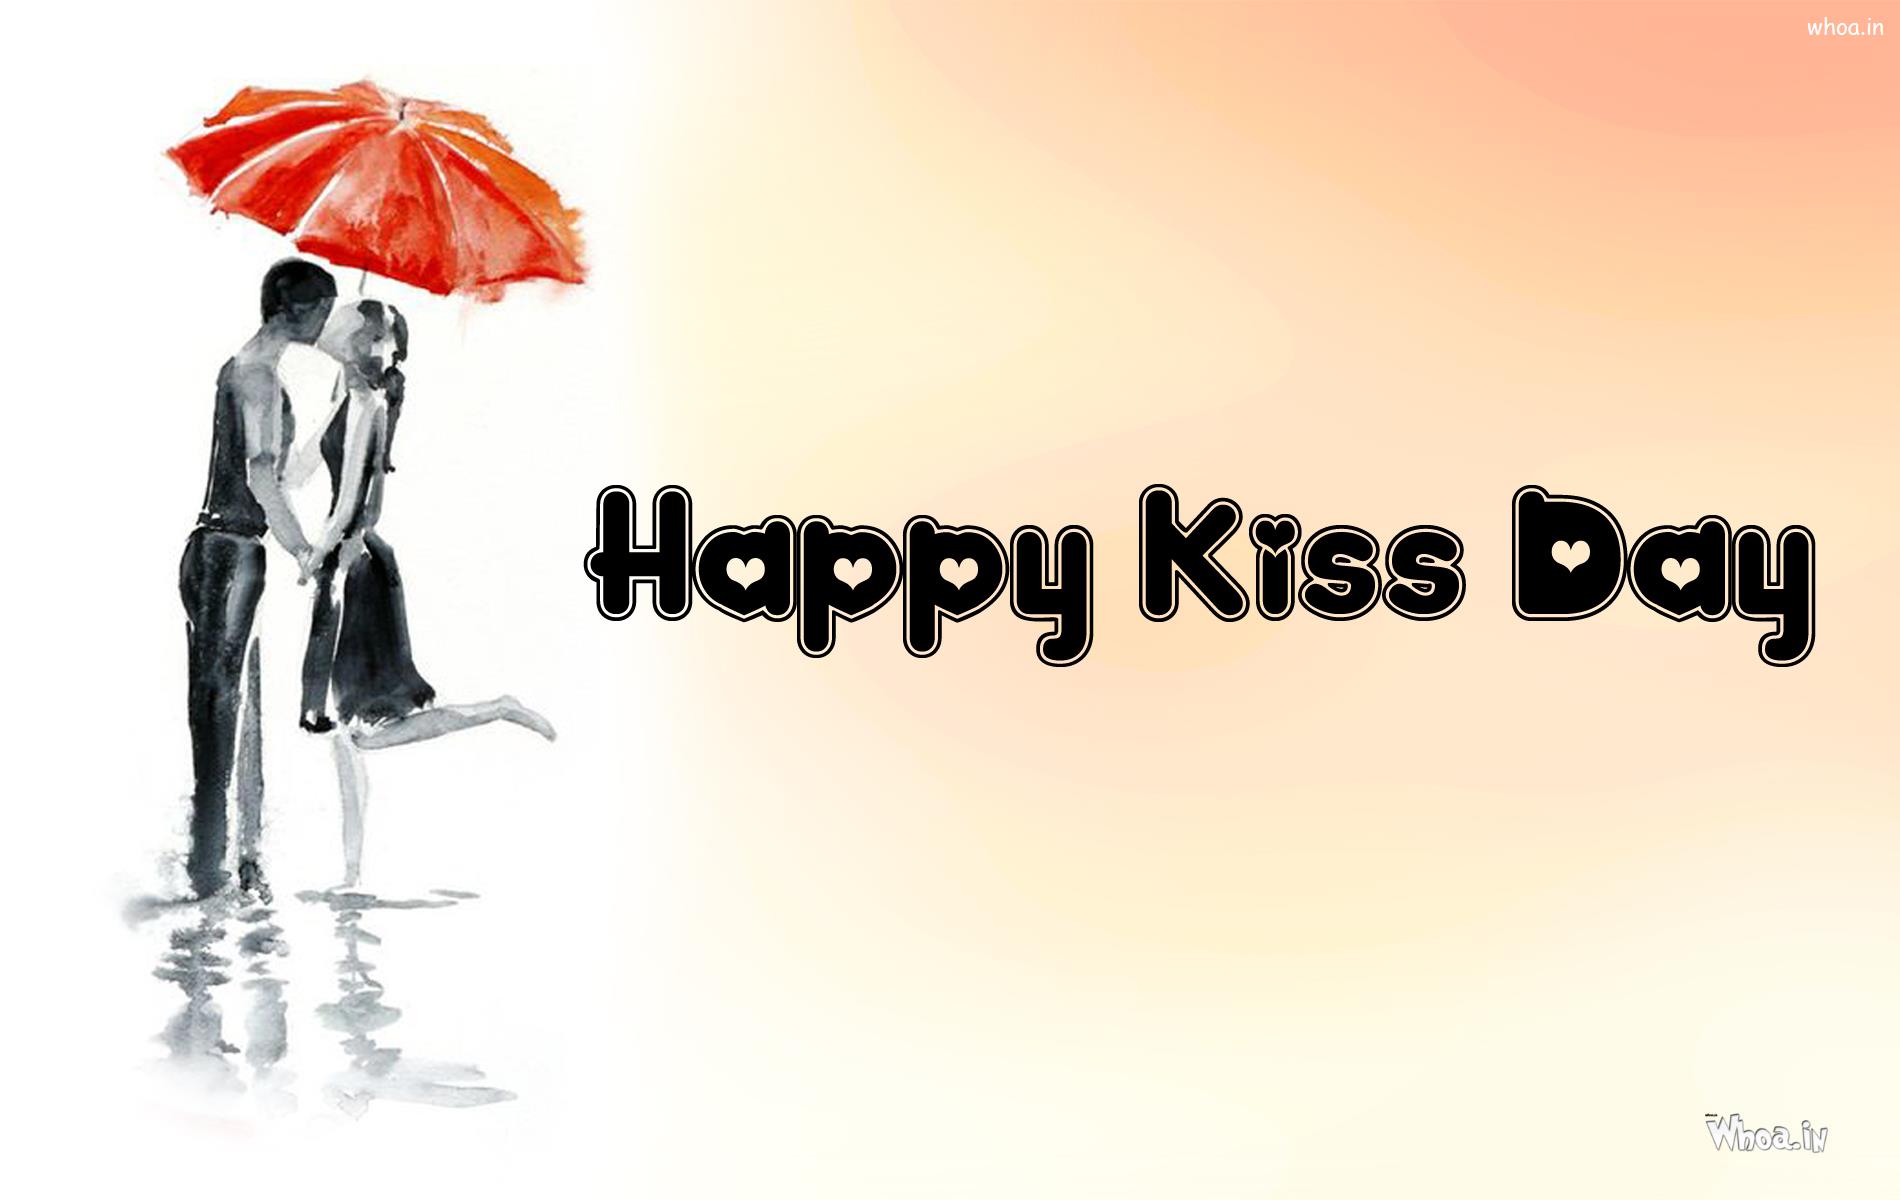 Kiss Day Wallpapers for Mobile & Desktop | CGfrog